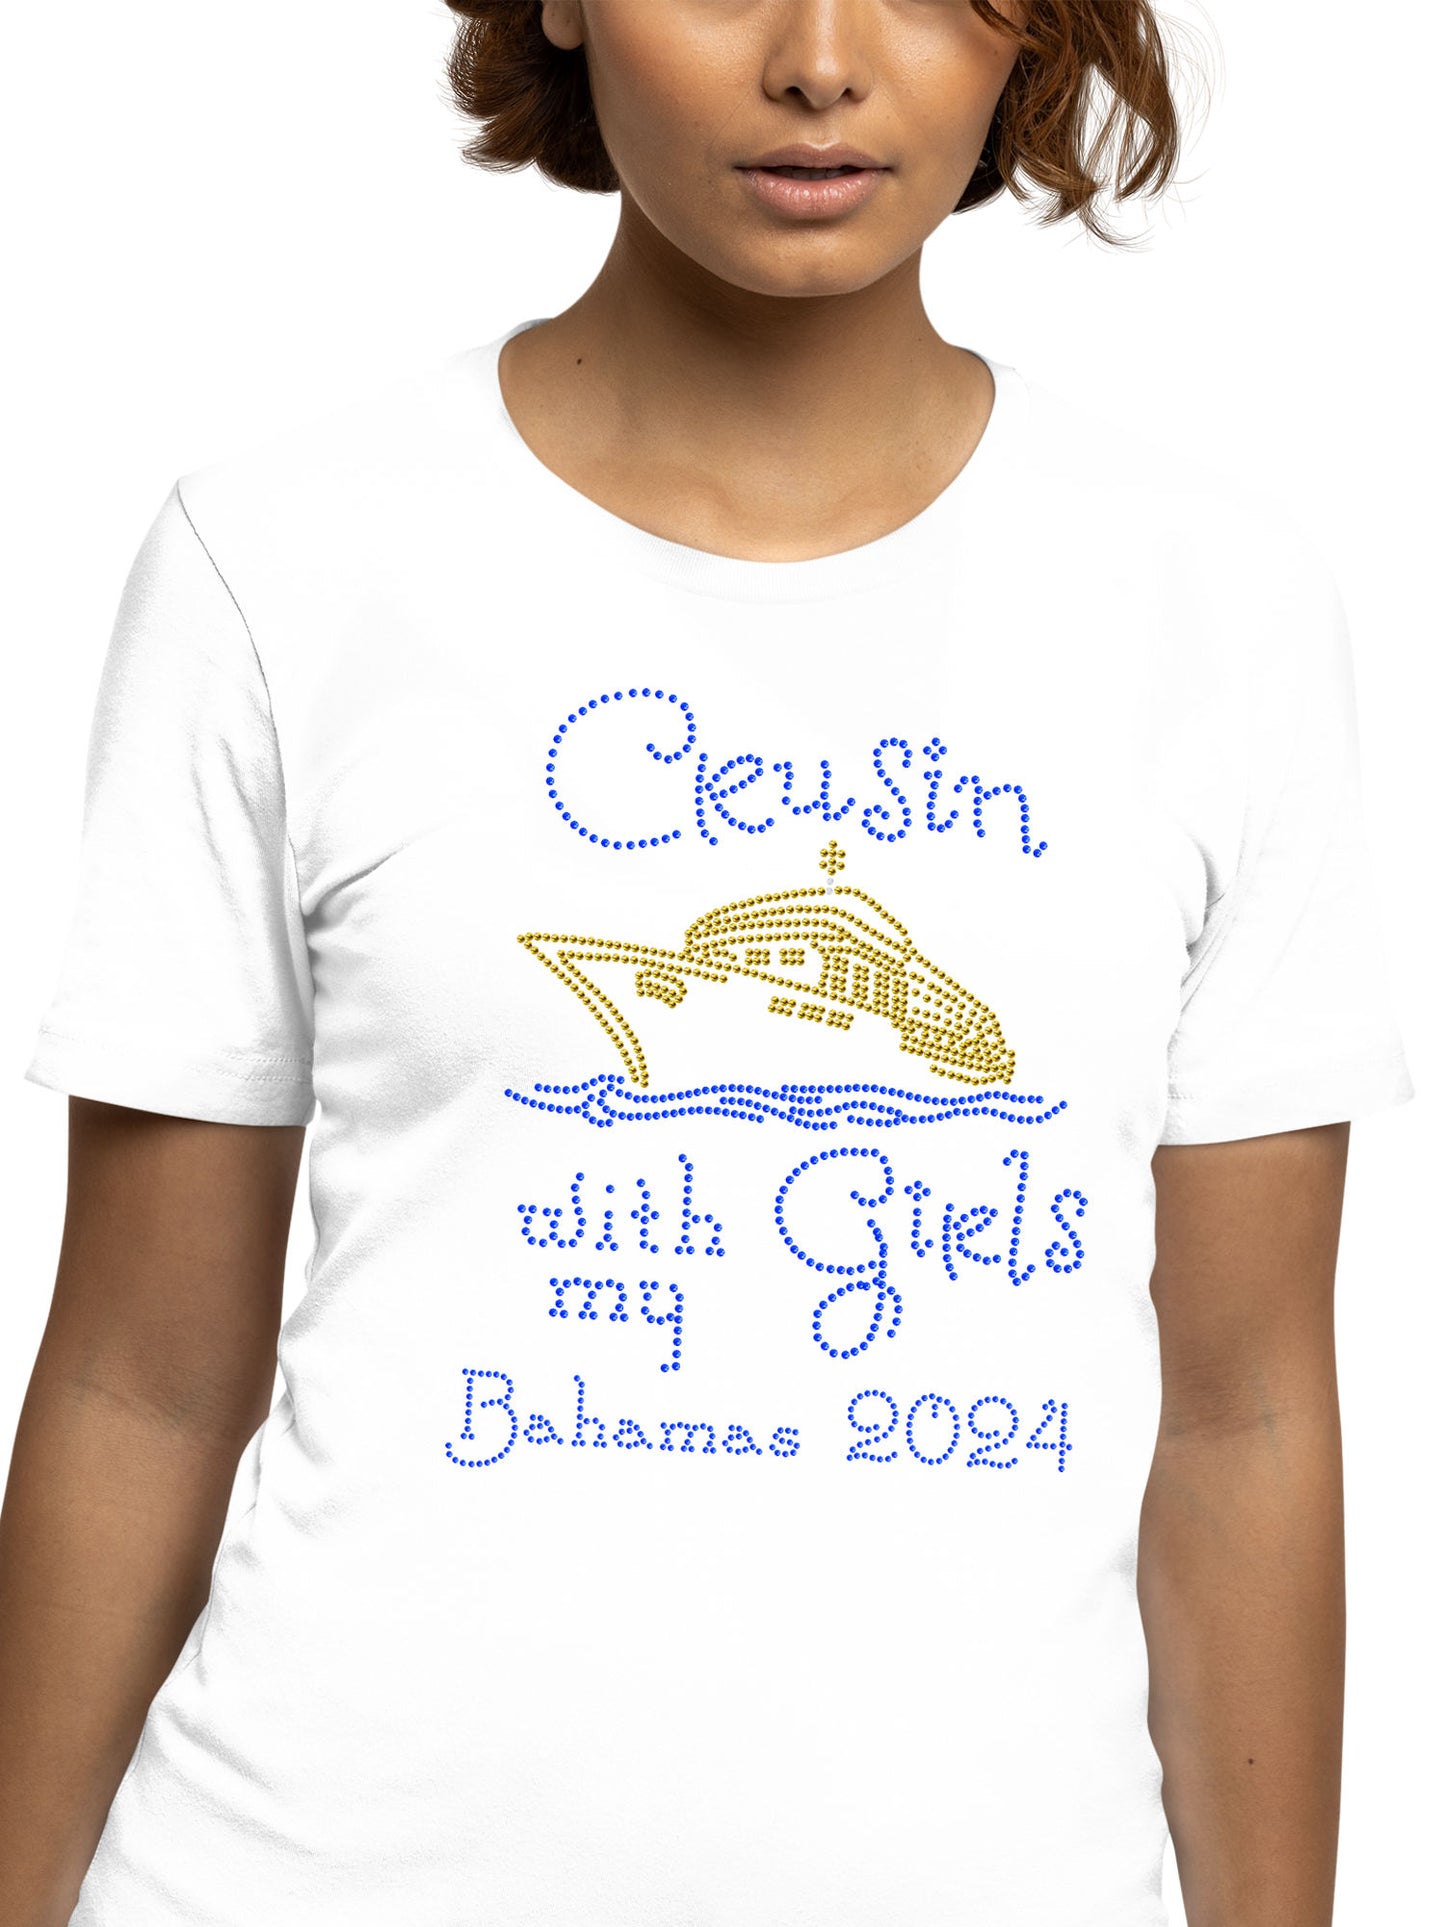 Crusin With My Girls Personalized Rhinestone T-Shirt